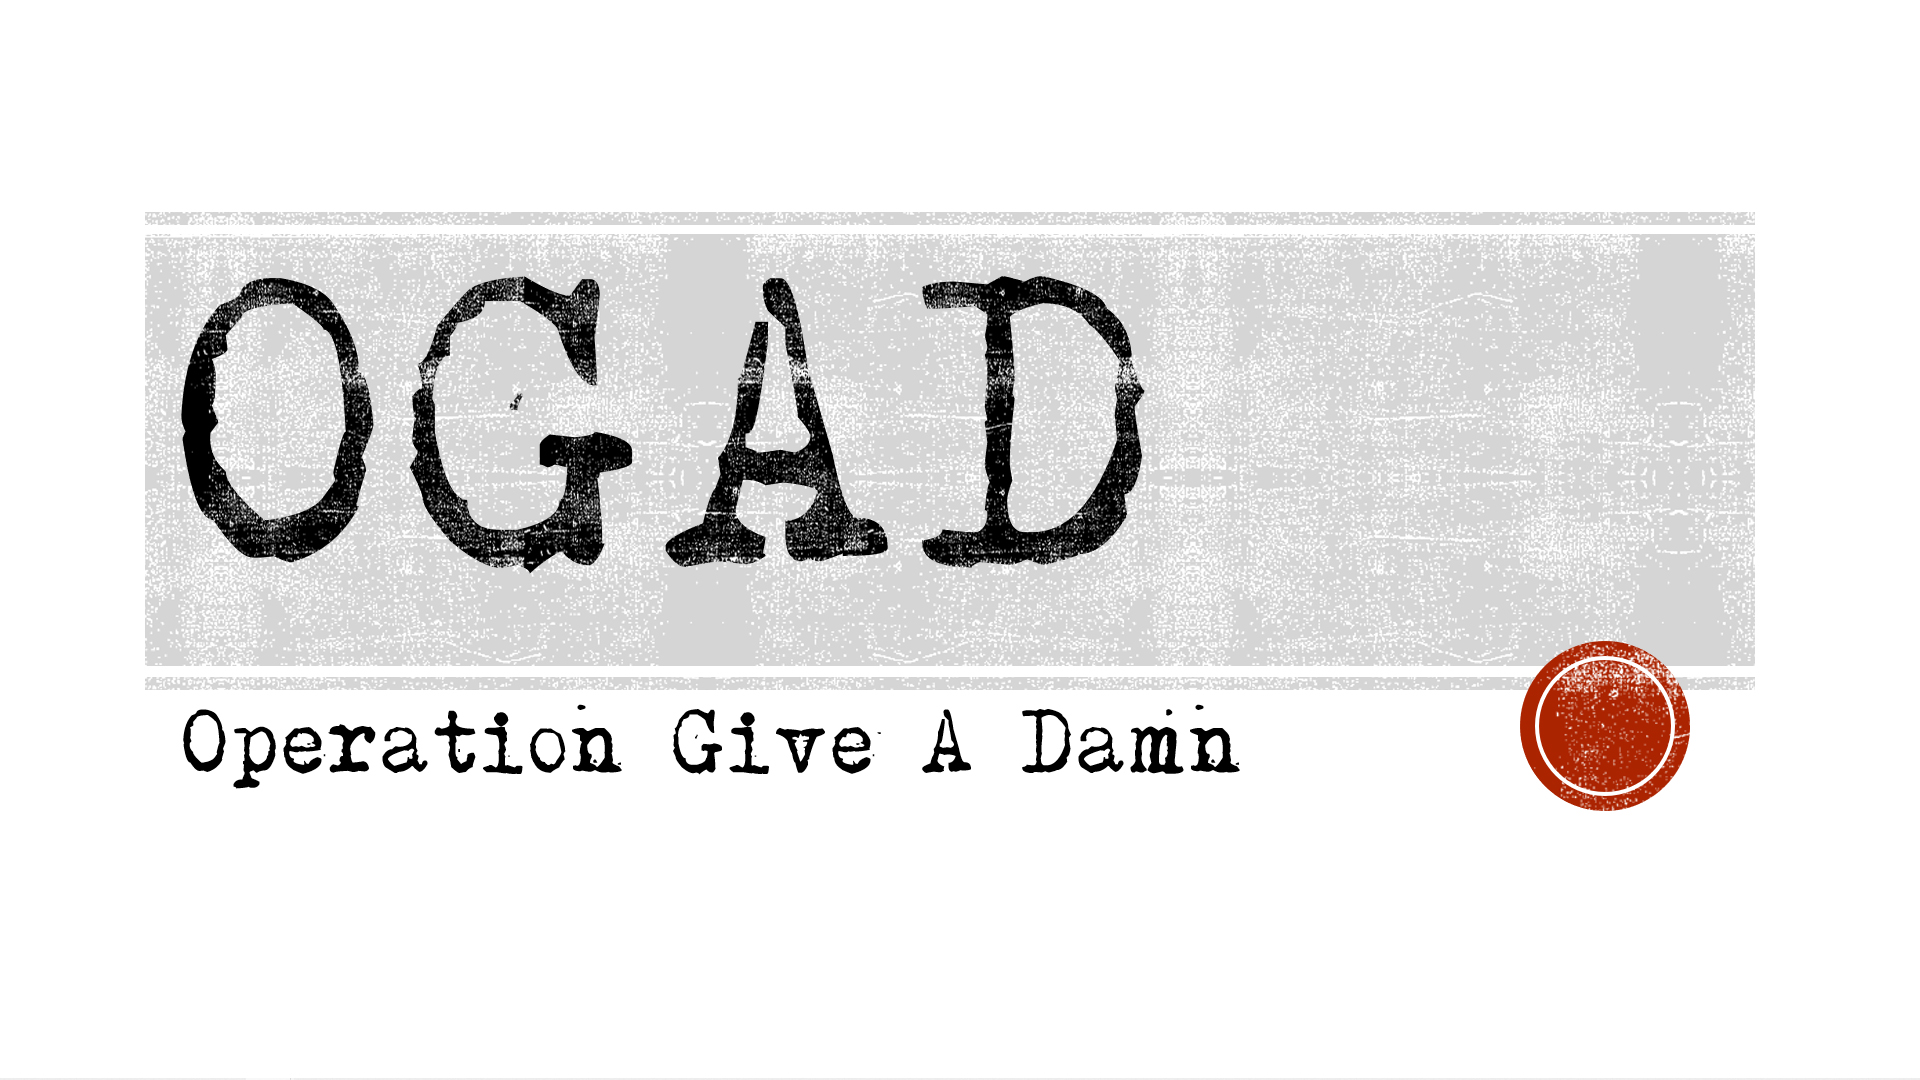 OGAD Image for Blog Entry